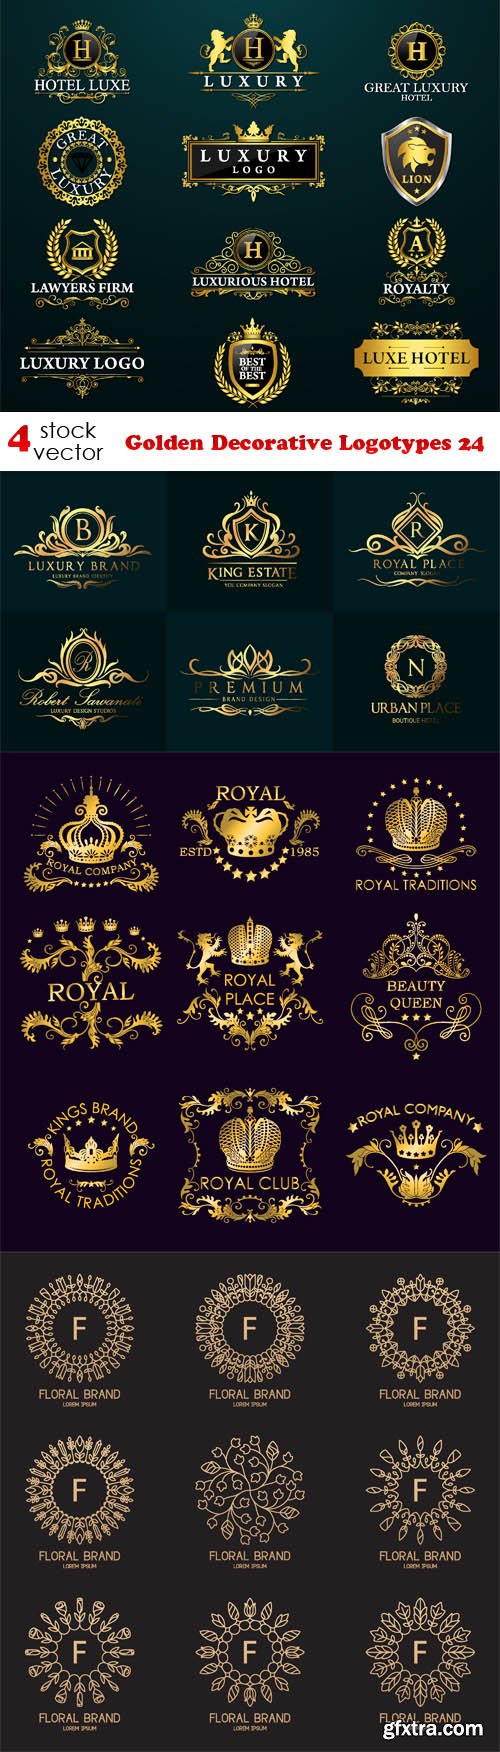 Vectors - Golden Decorative Logotypes 24